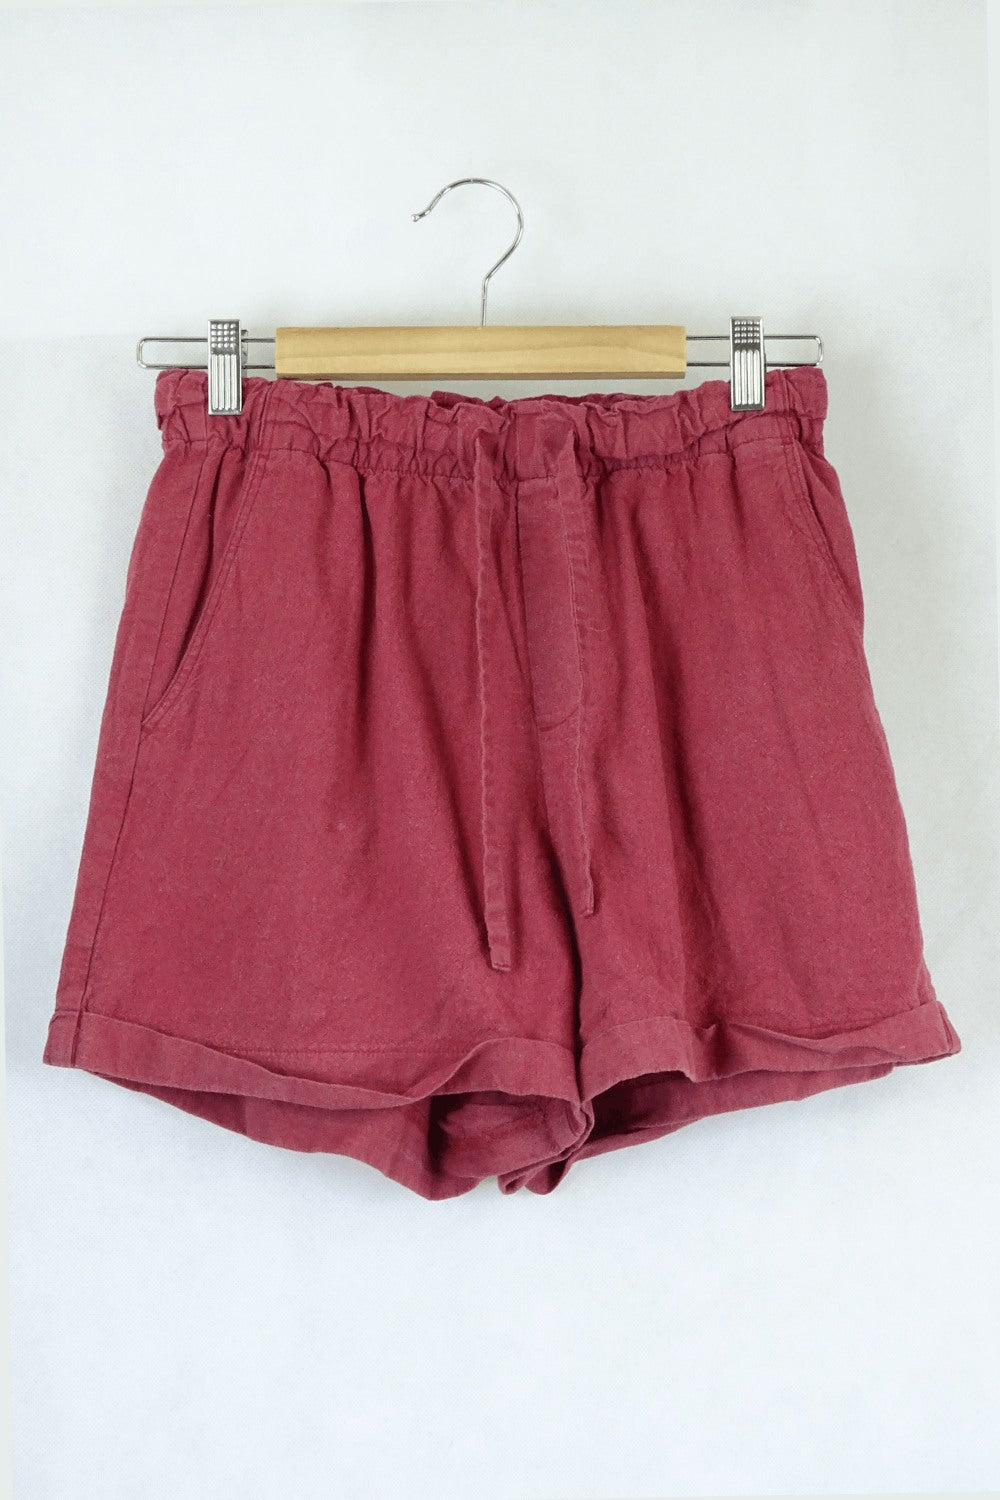 Uniqlo Red Shorts S